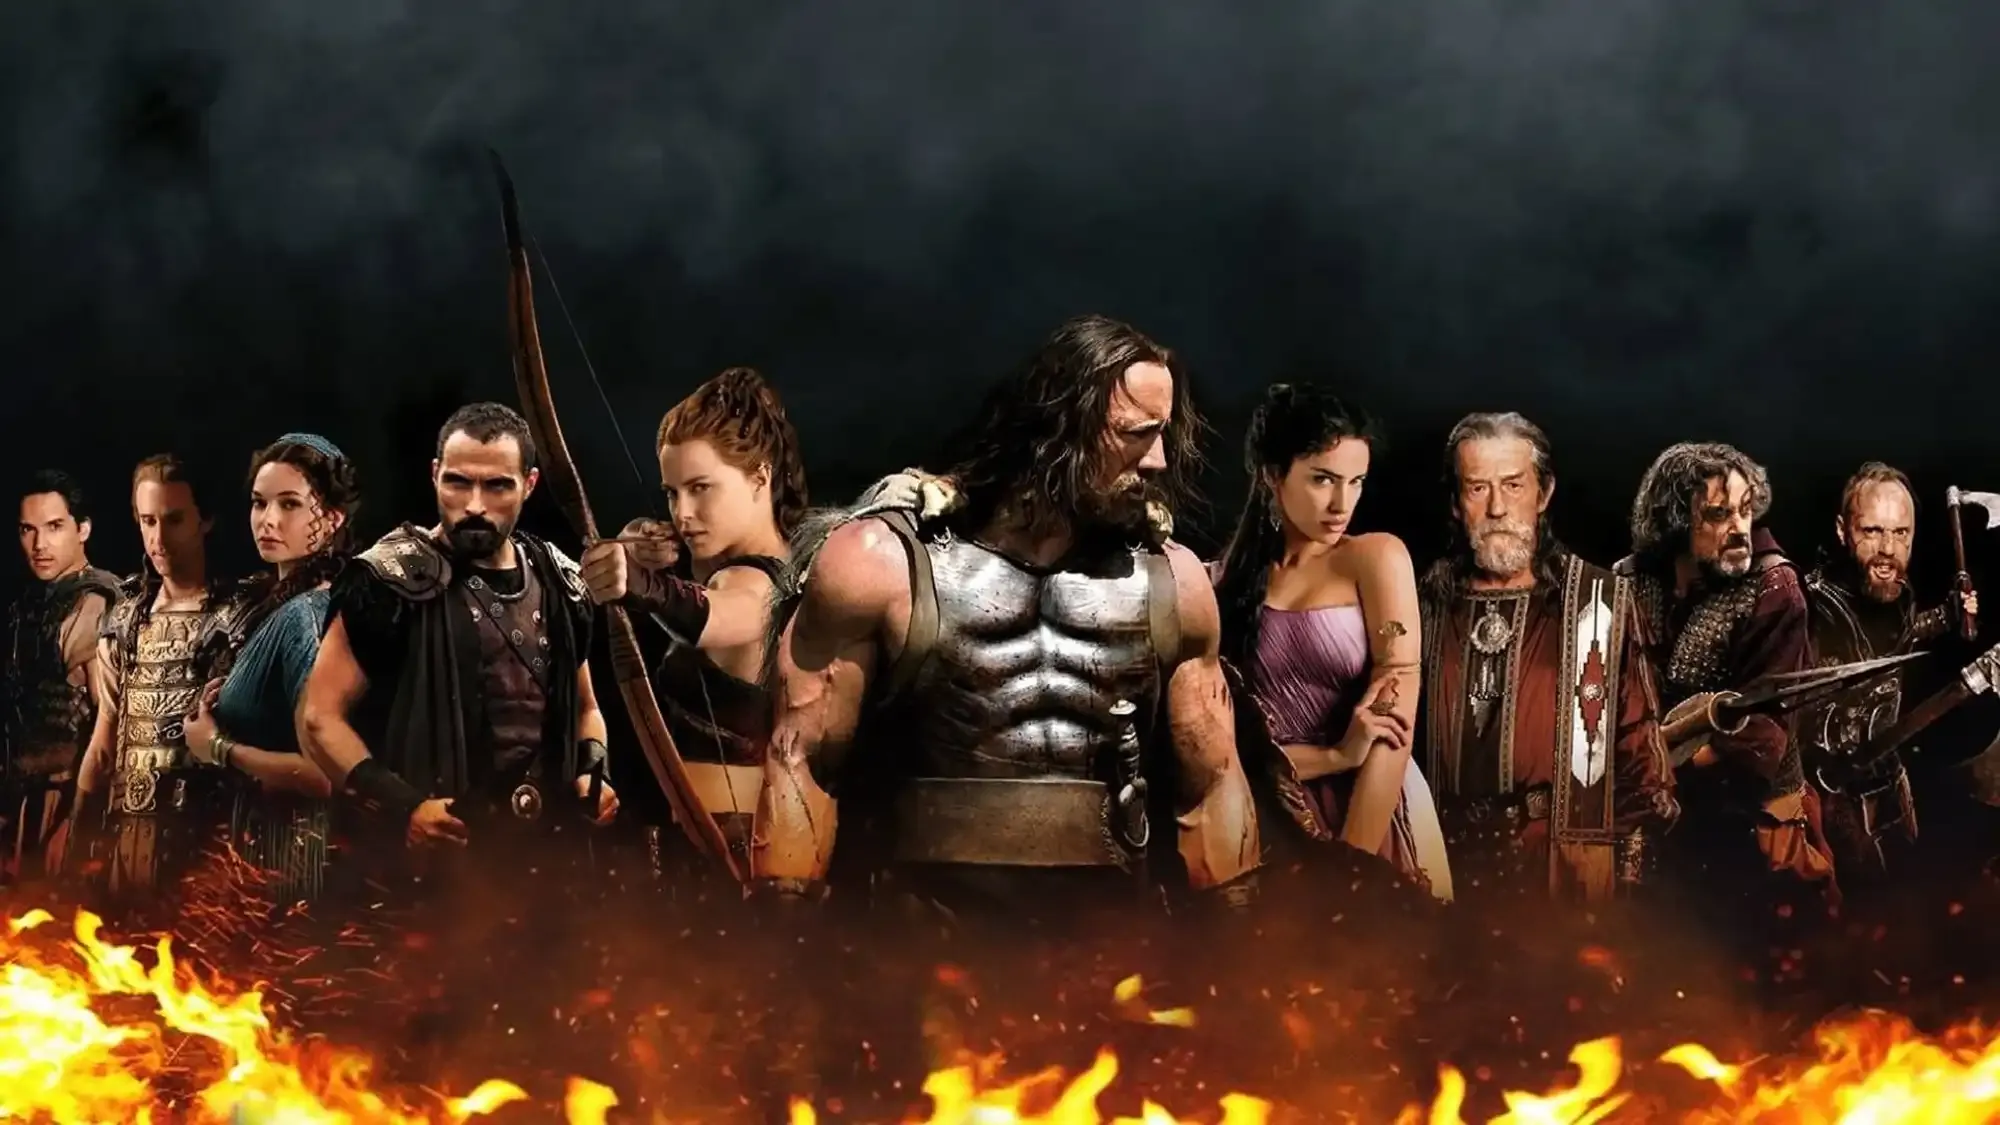 Hercules movie review